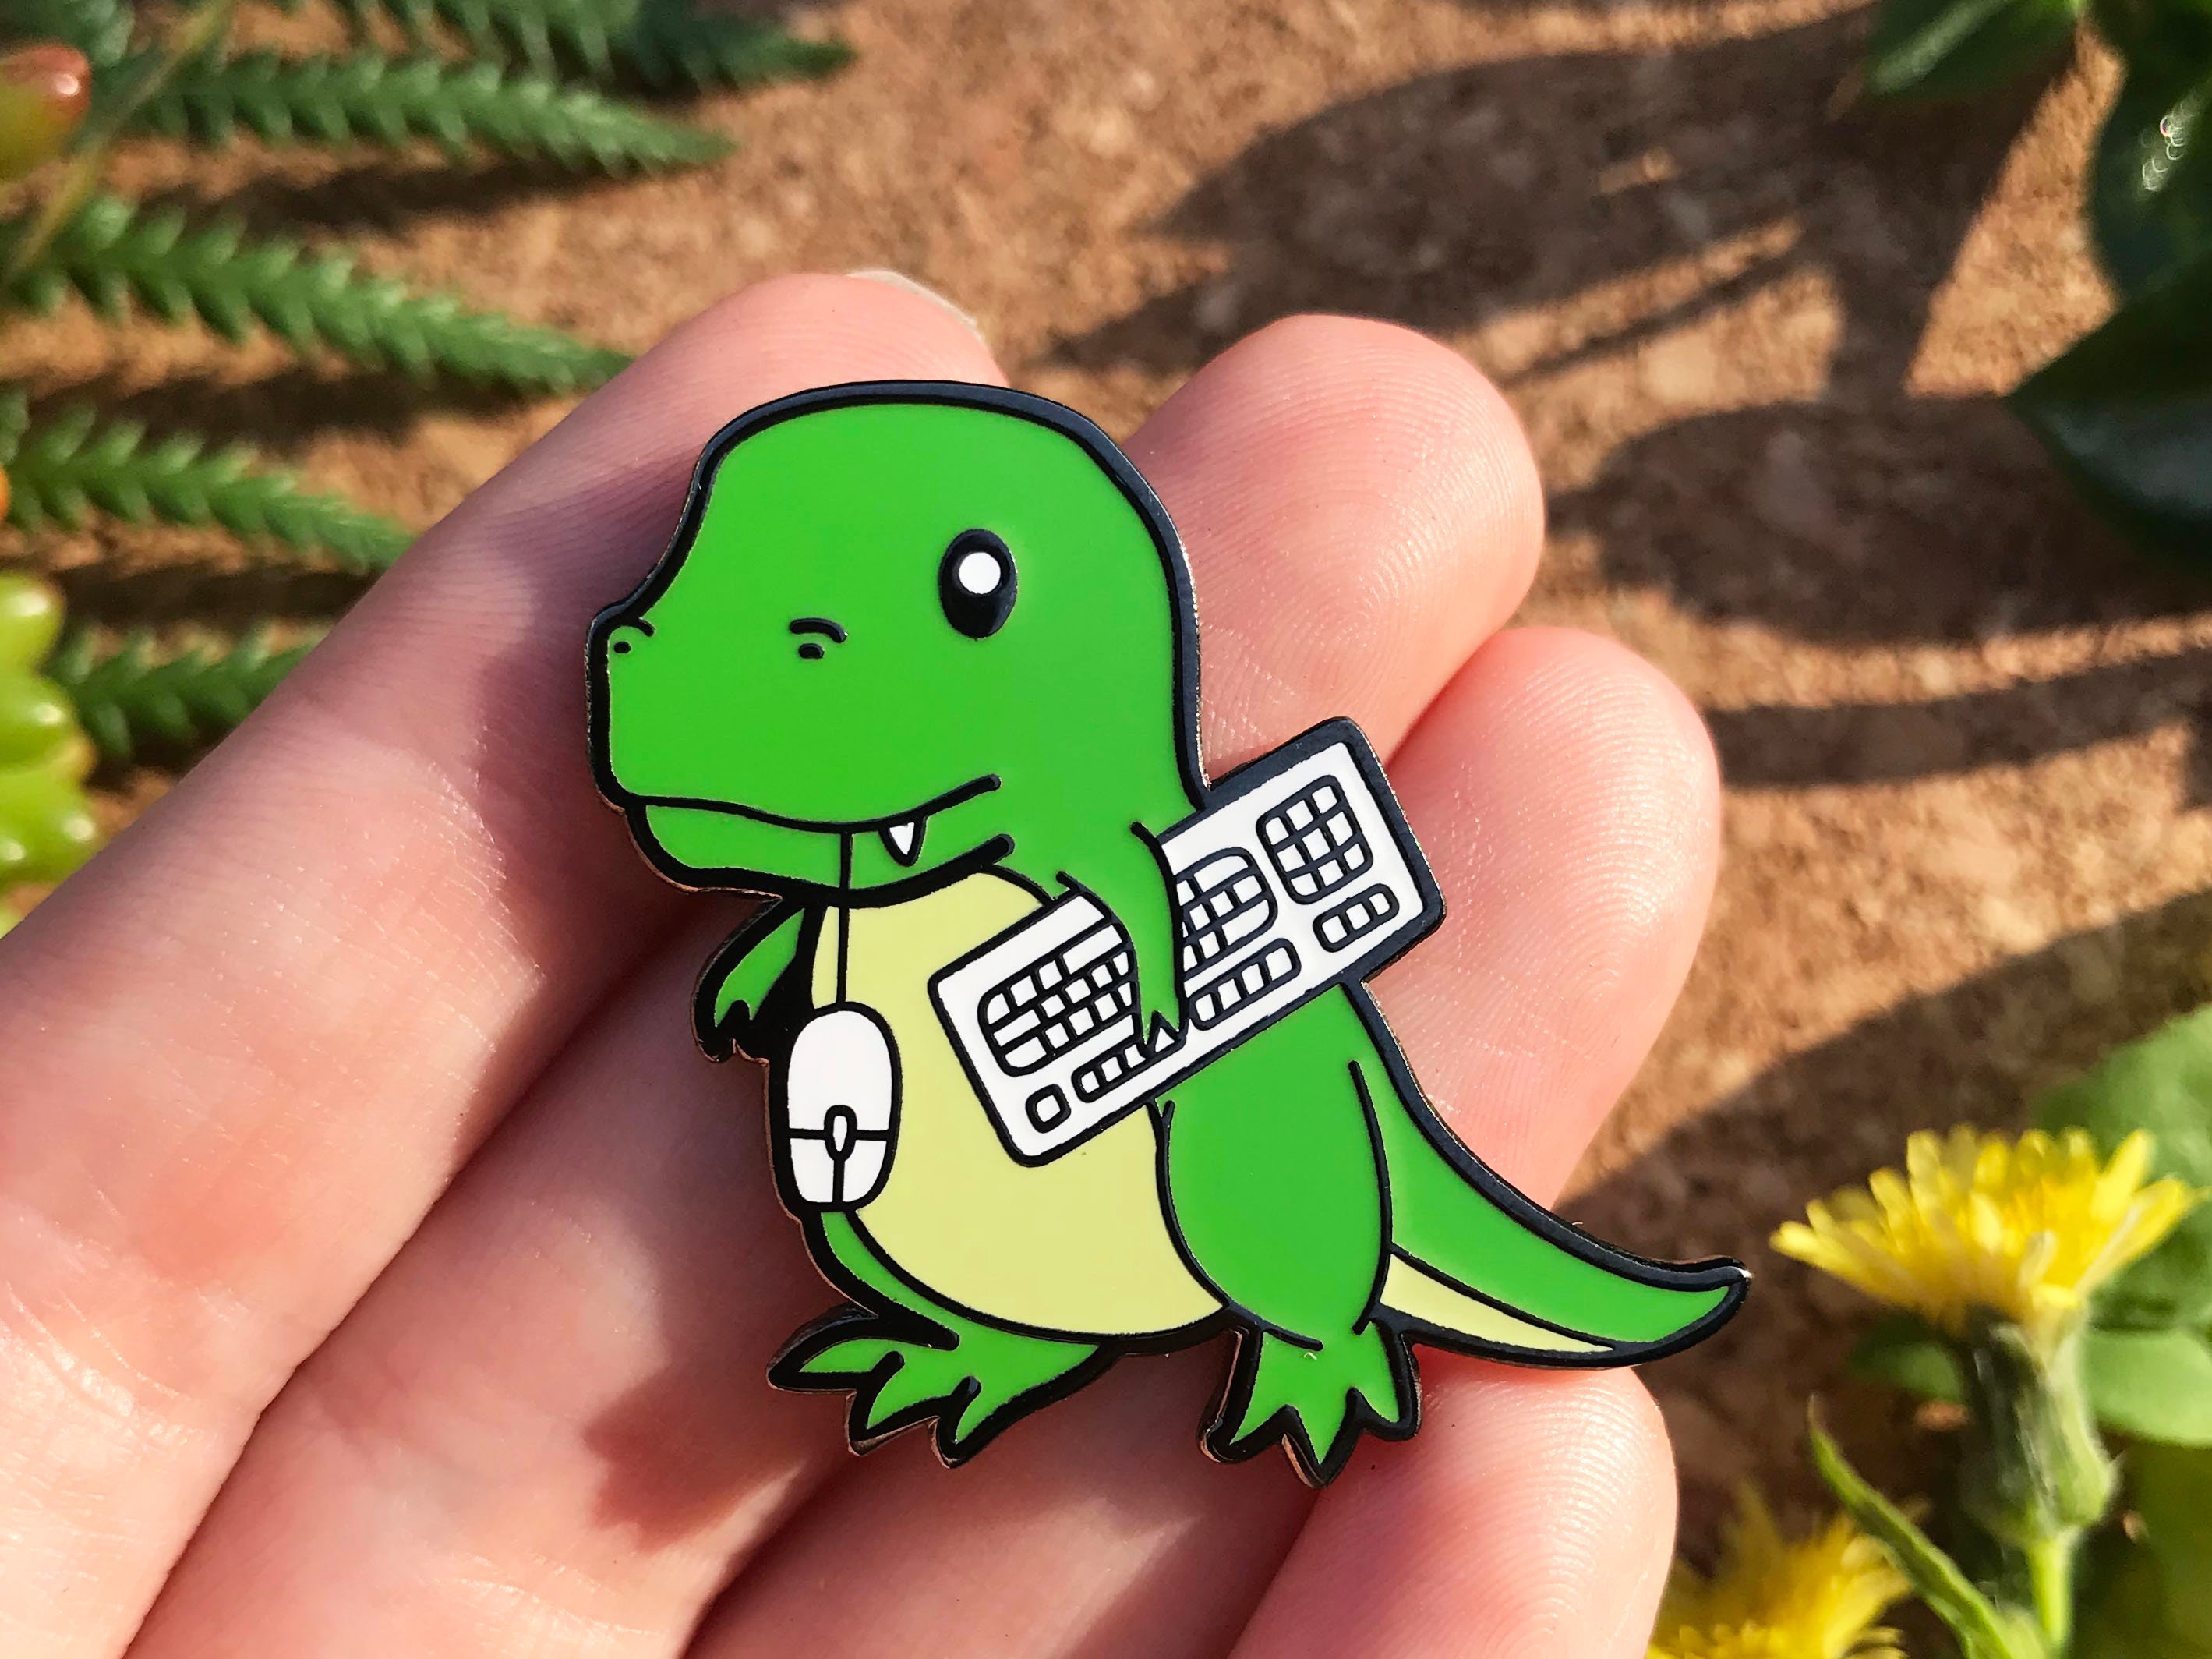 Baby Dinosaur Pastel Enamel Pins Lapel Brooch Cute | Kawaii Babe Green T-Rex